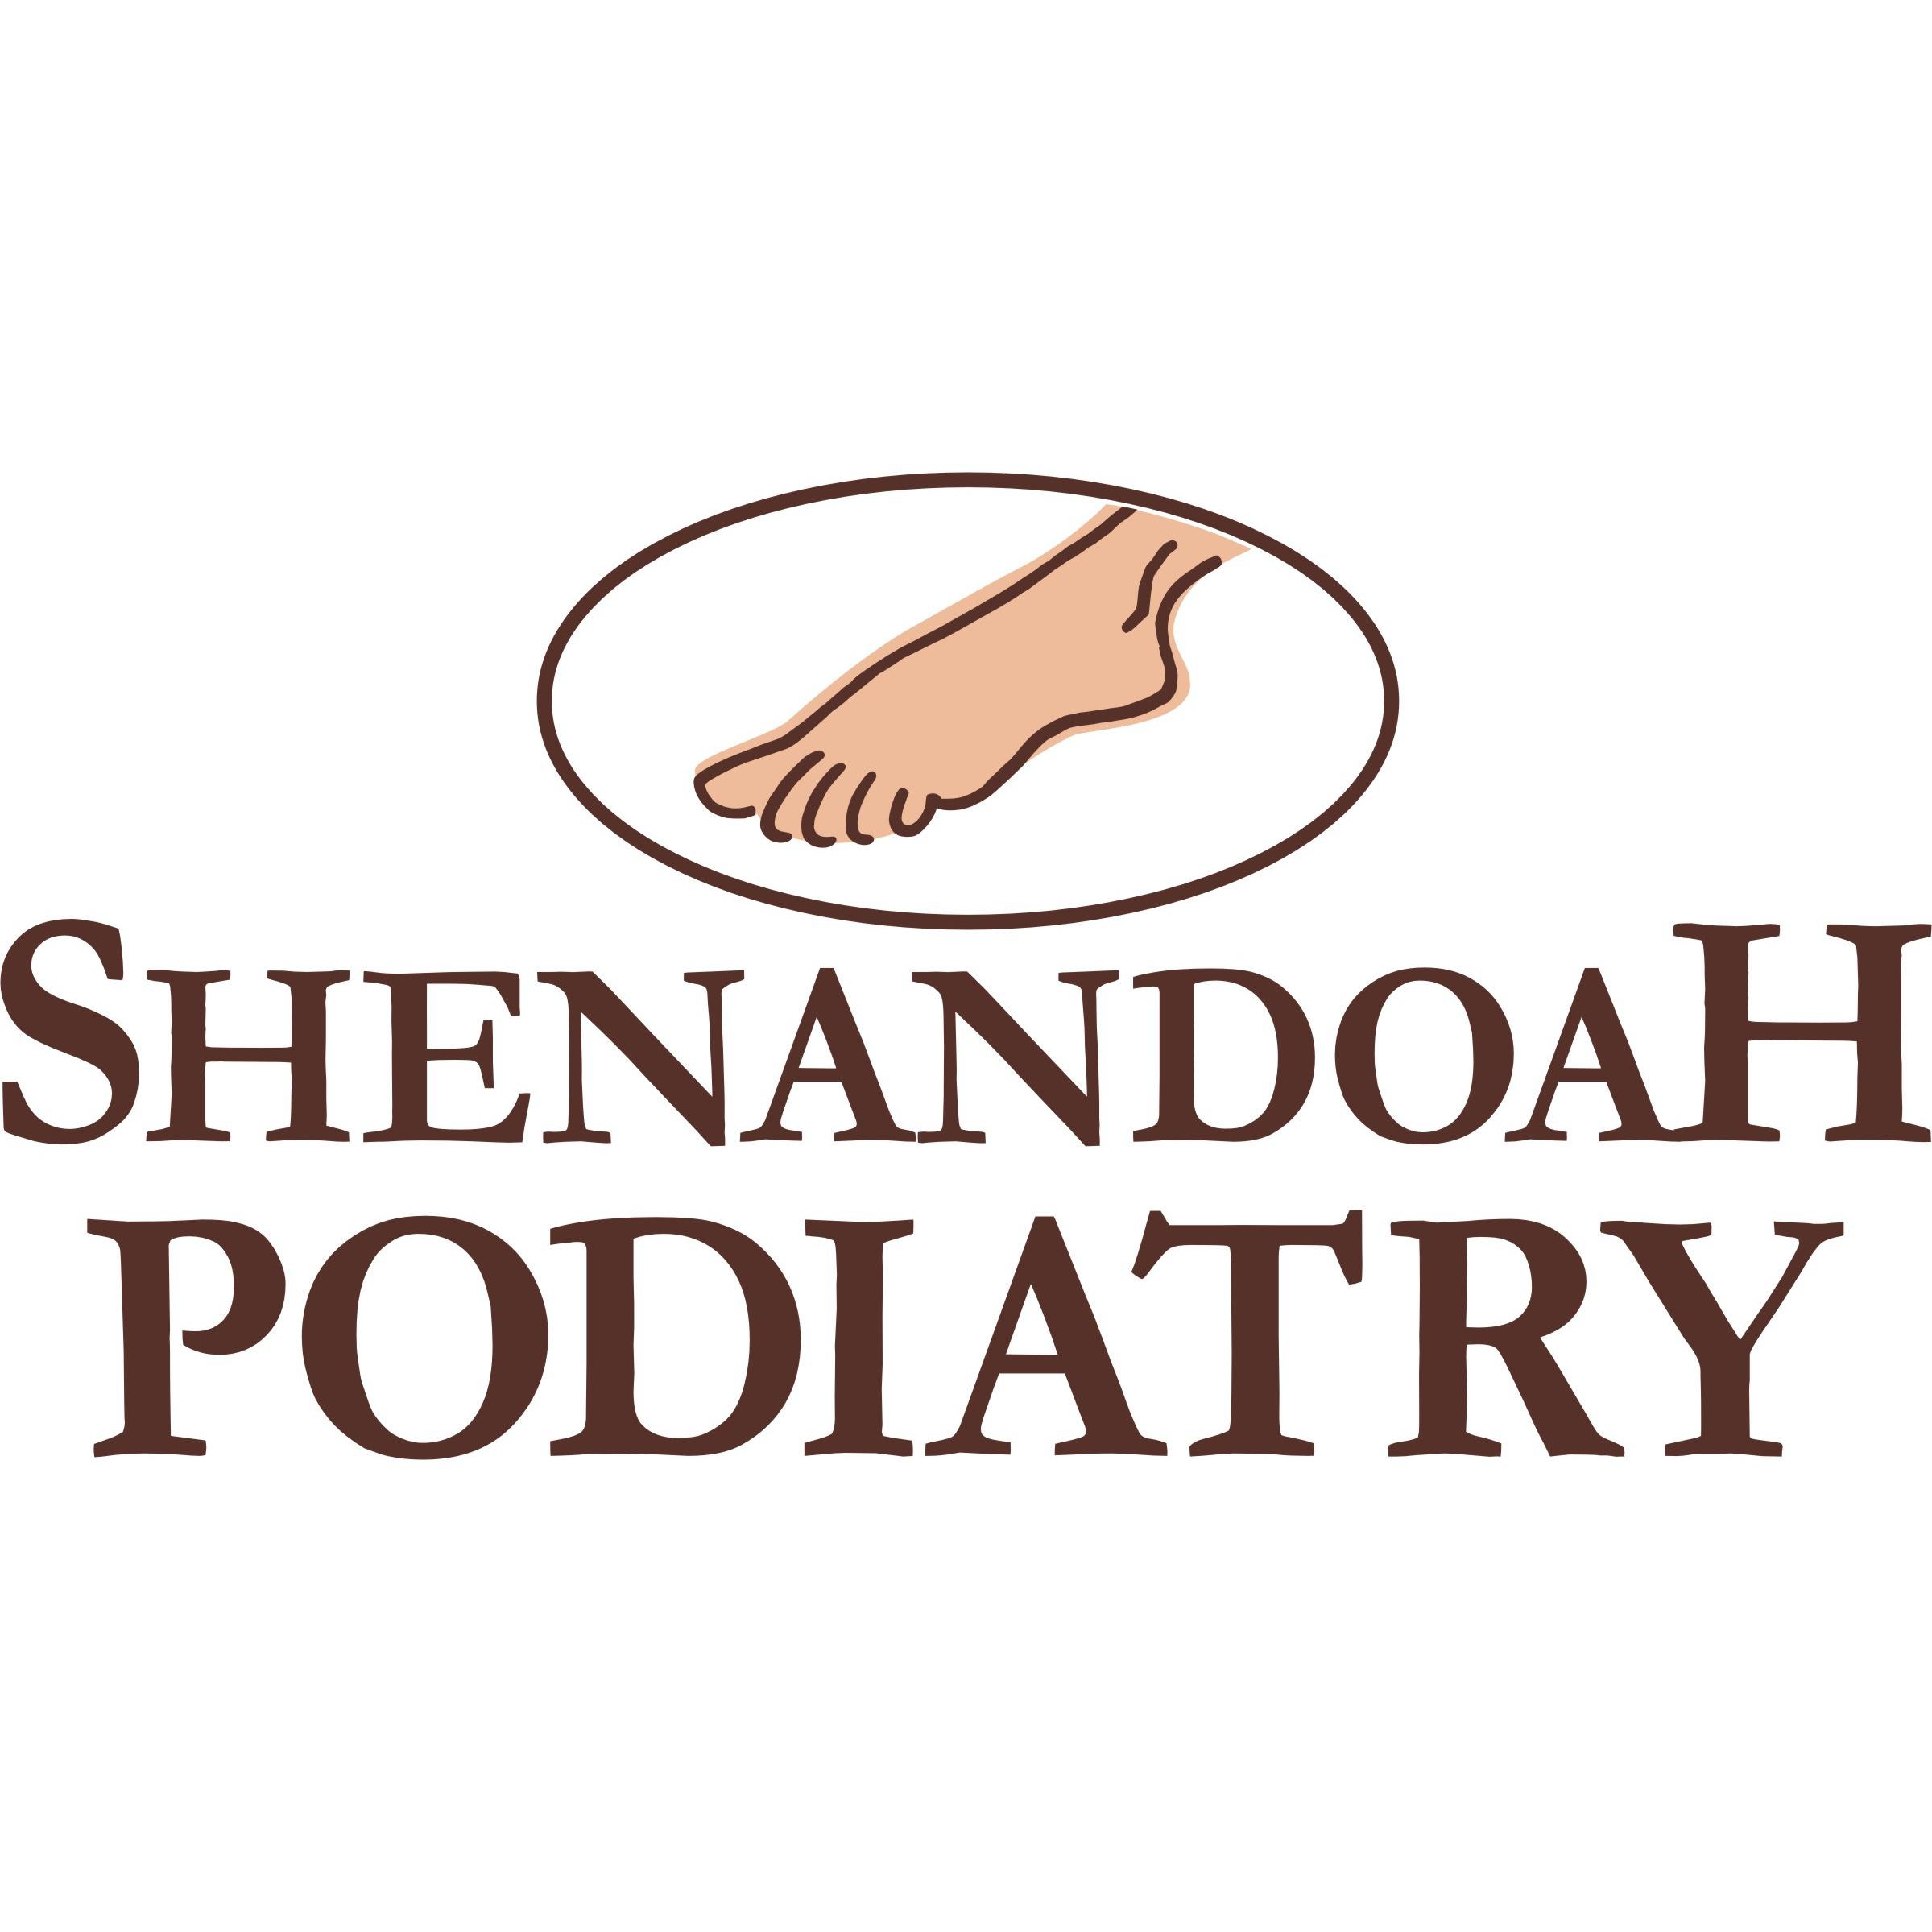 Shenandoah Podiatry - Roanoke, VA 24019 - (540)904-1458 | ShowMeLocal.com